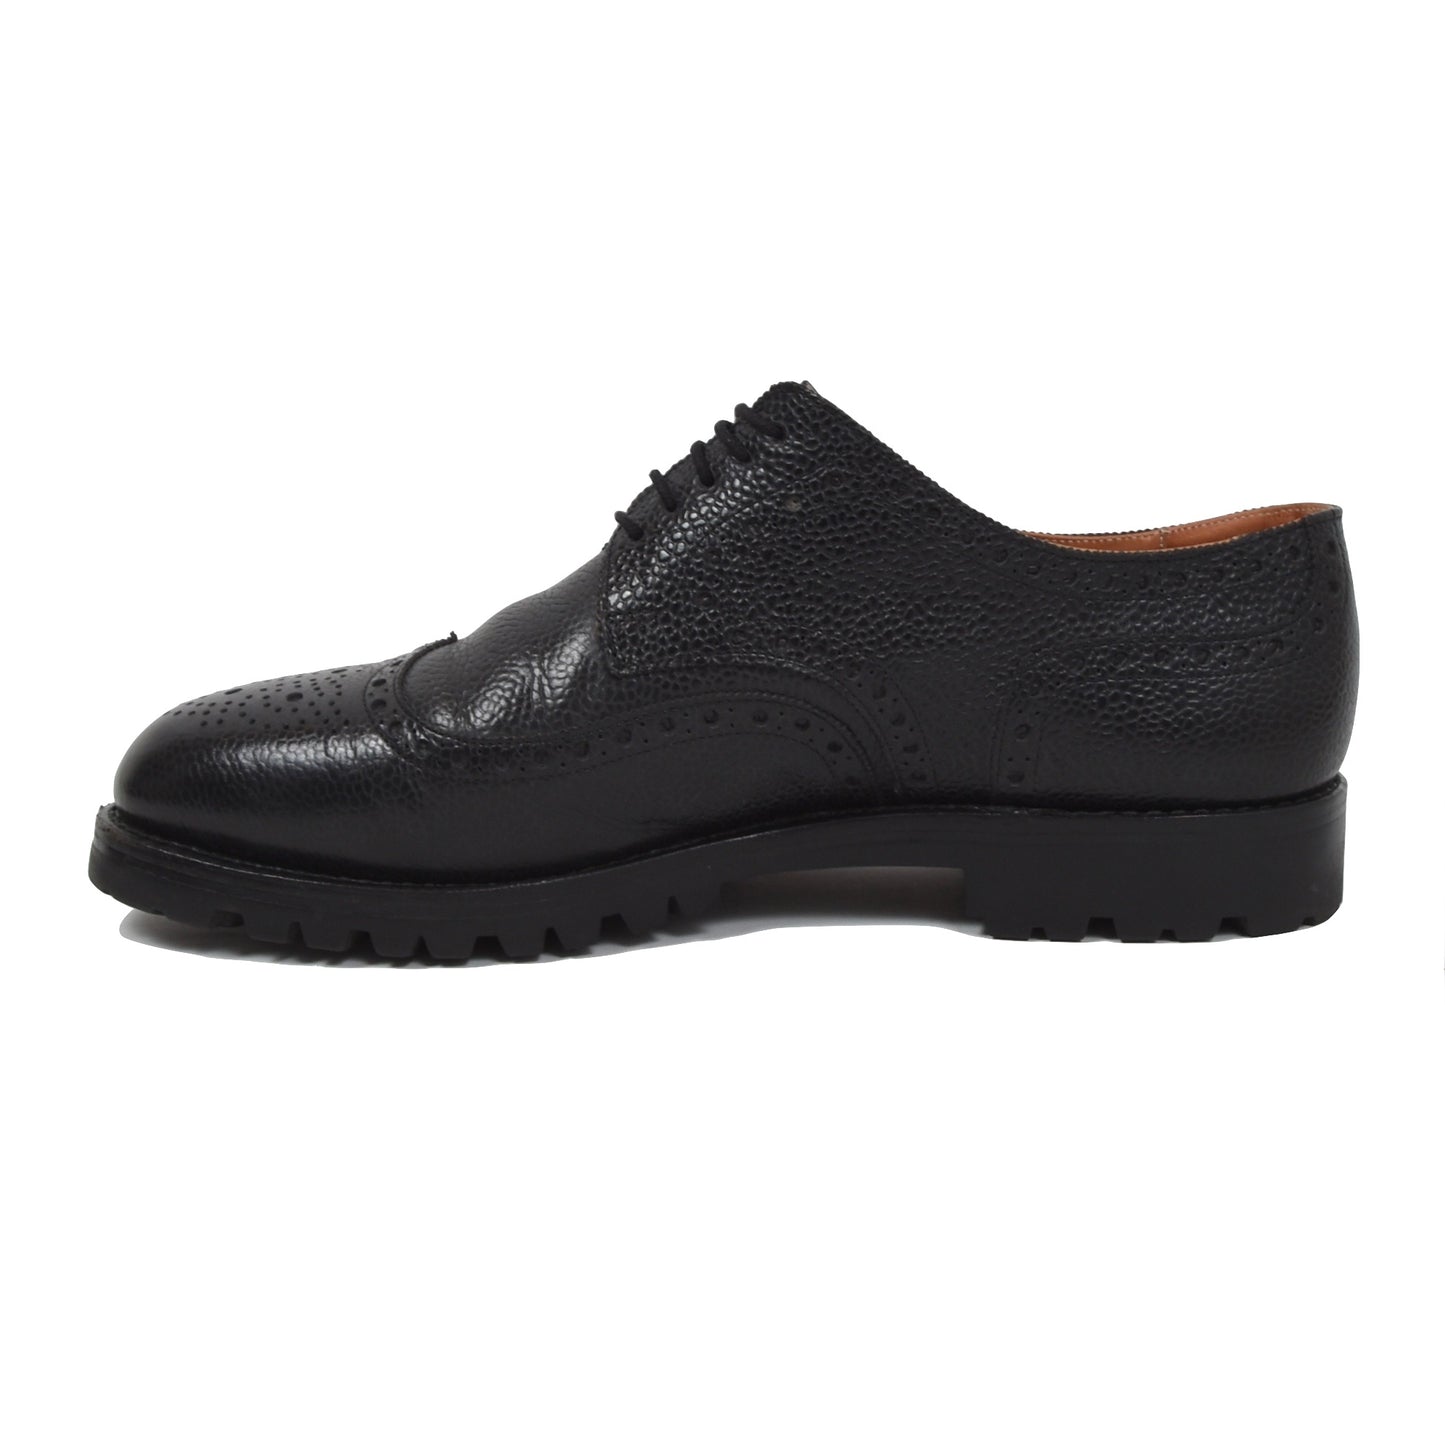 Ludwig Reiter Scotch Grain Shoes Size 9.5 - Black